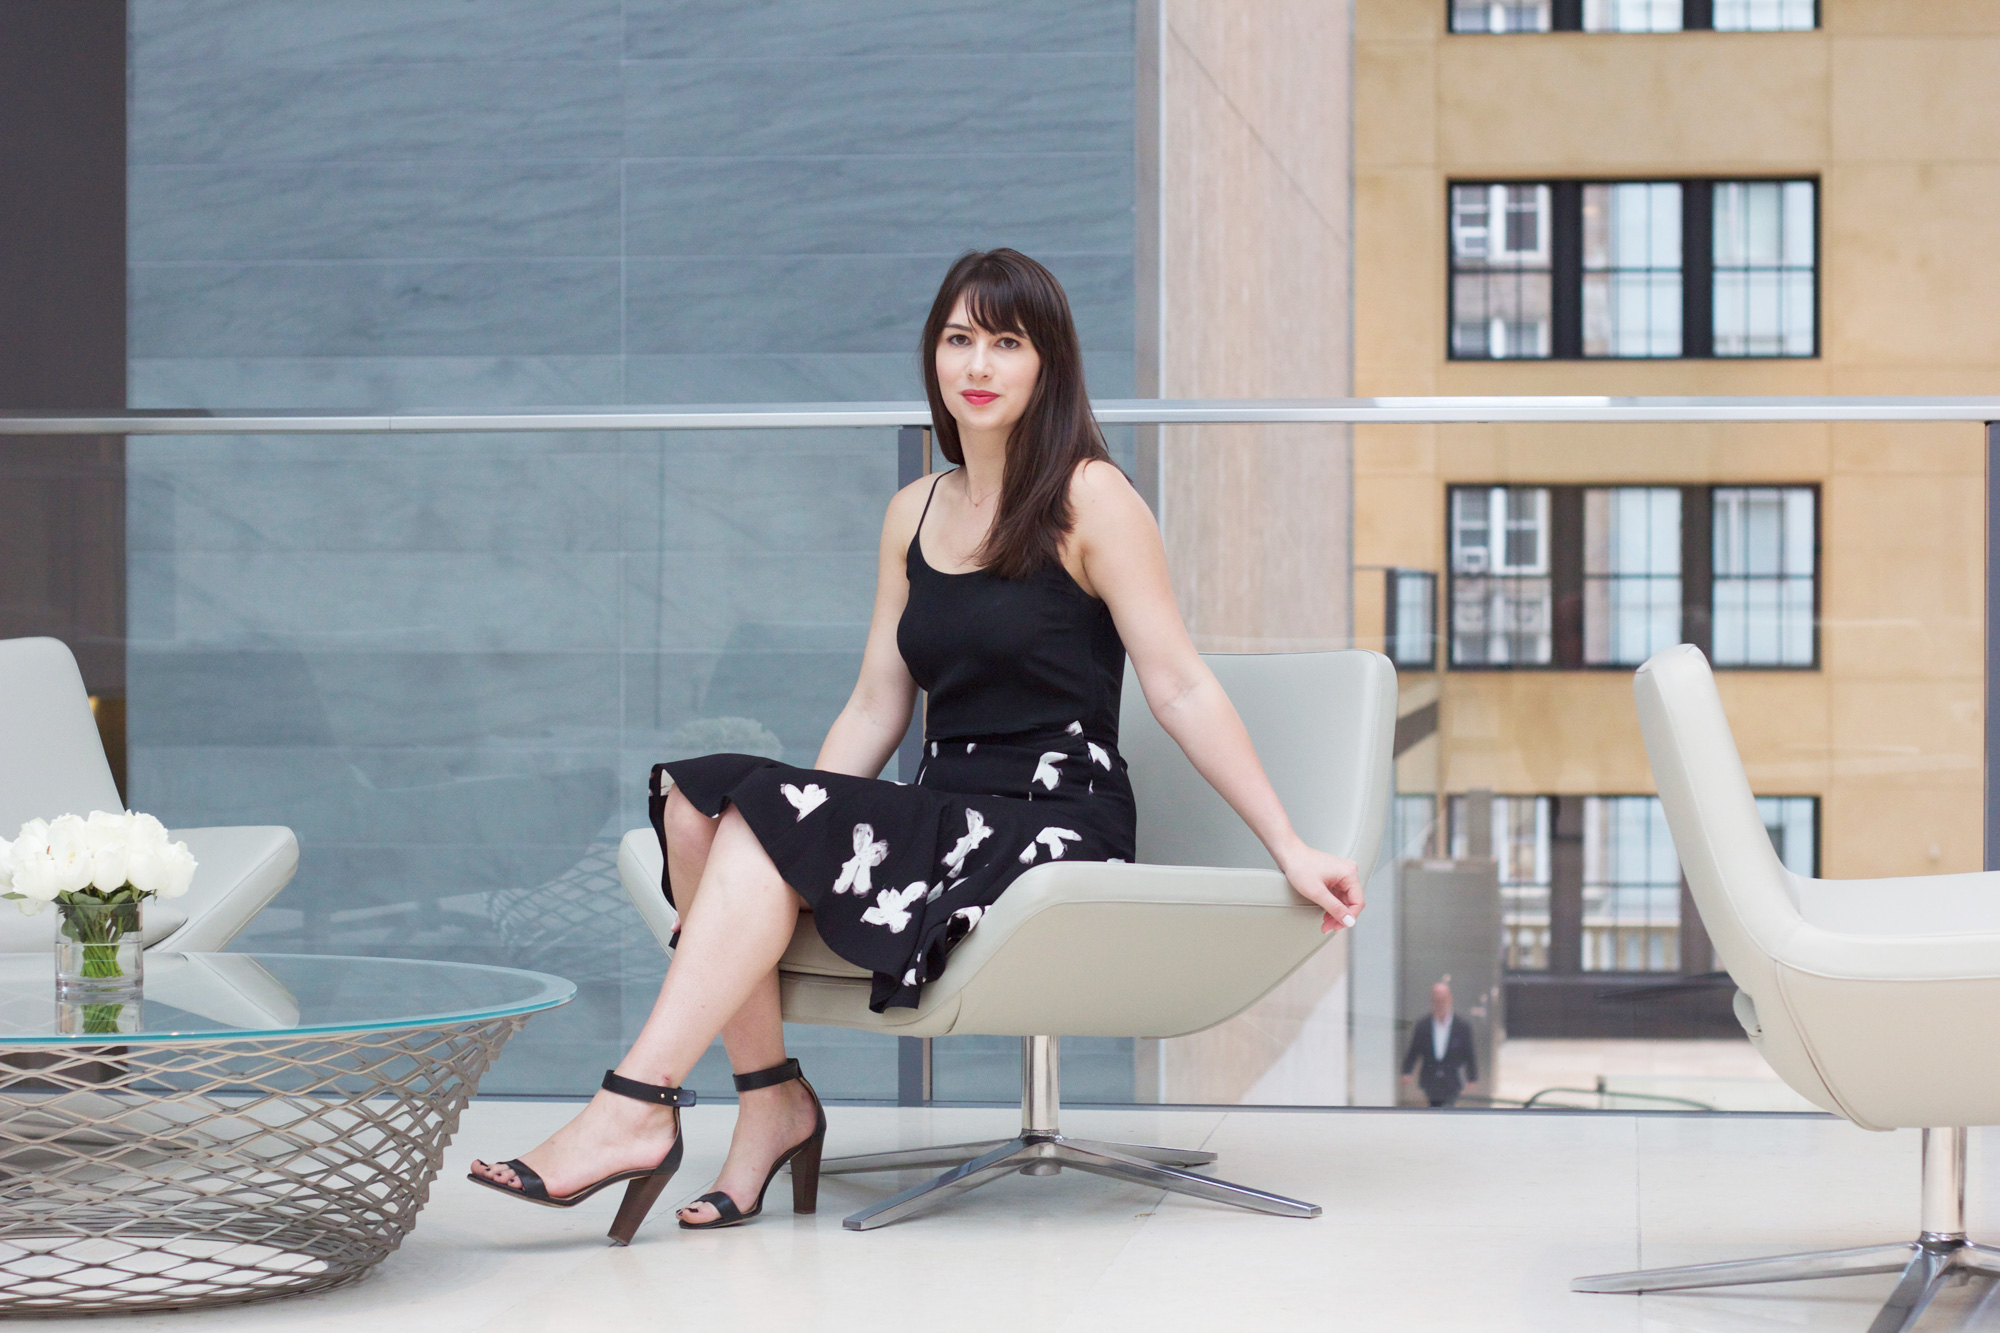 Beauty talk with Harper's Bazaar Online Beauty Editor Alexandra Tunell